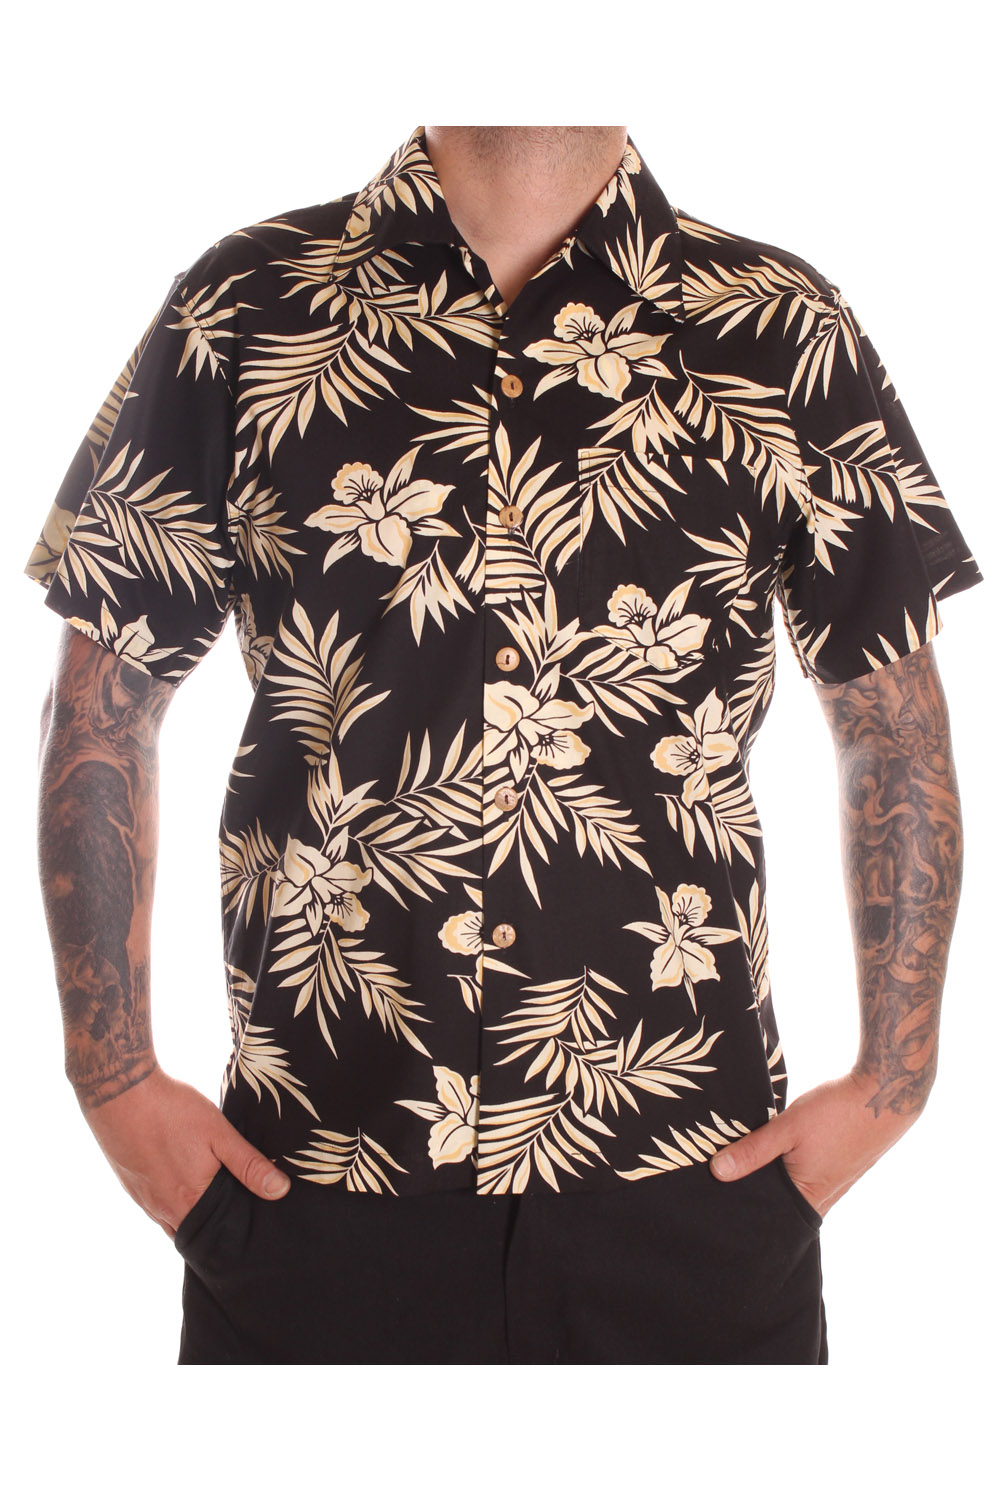 retro Hawaii Blumen Hibiskus rockabilly Hawaiihemd Shirt schwarz f